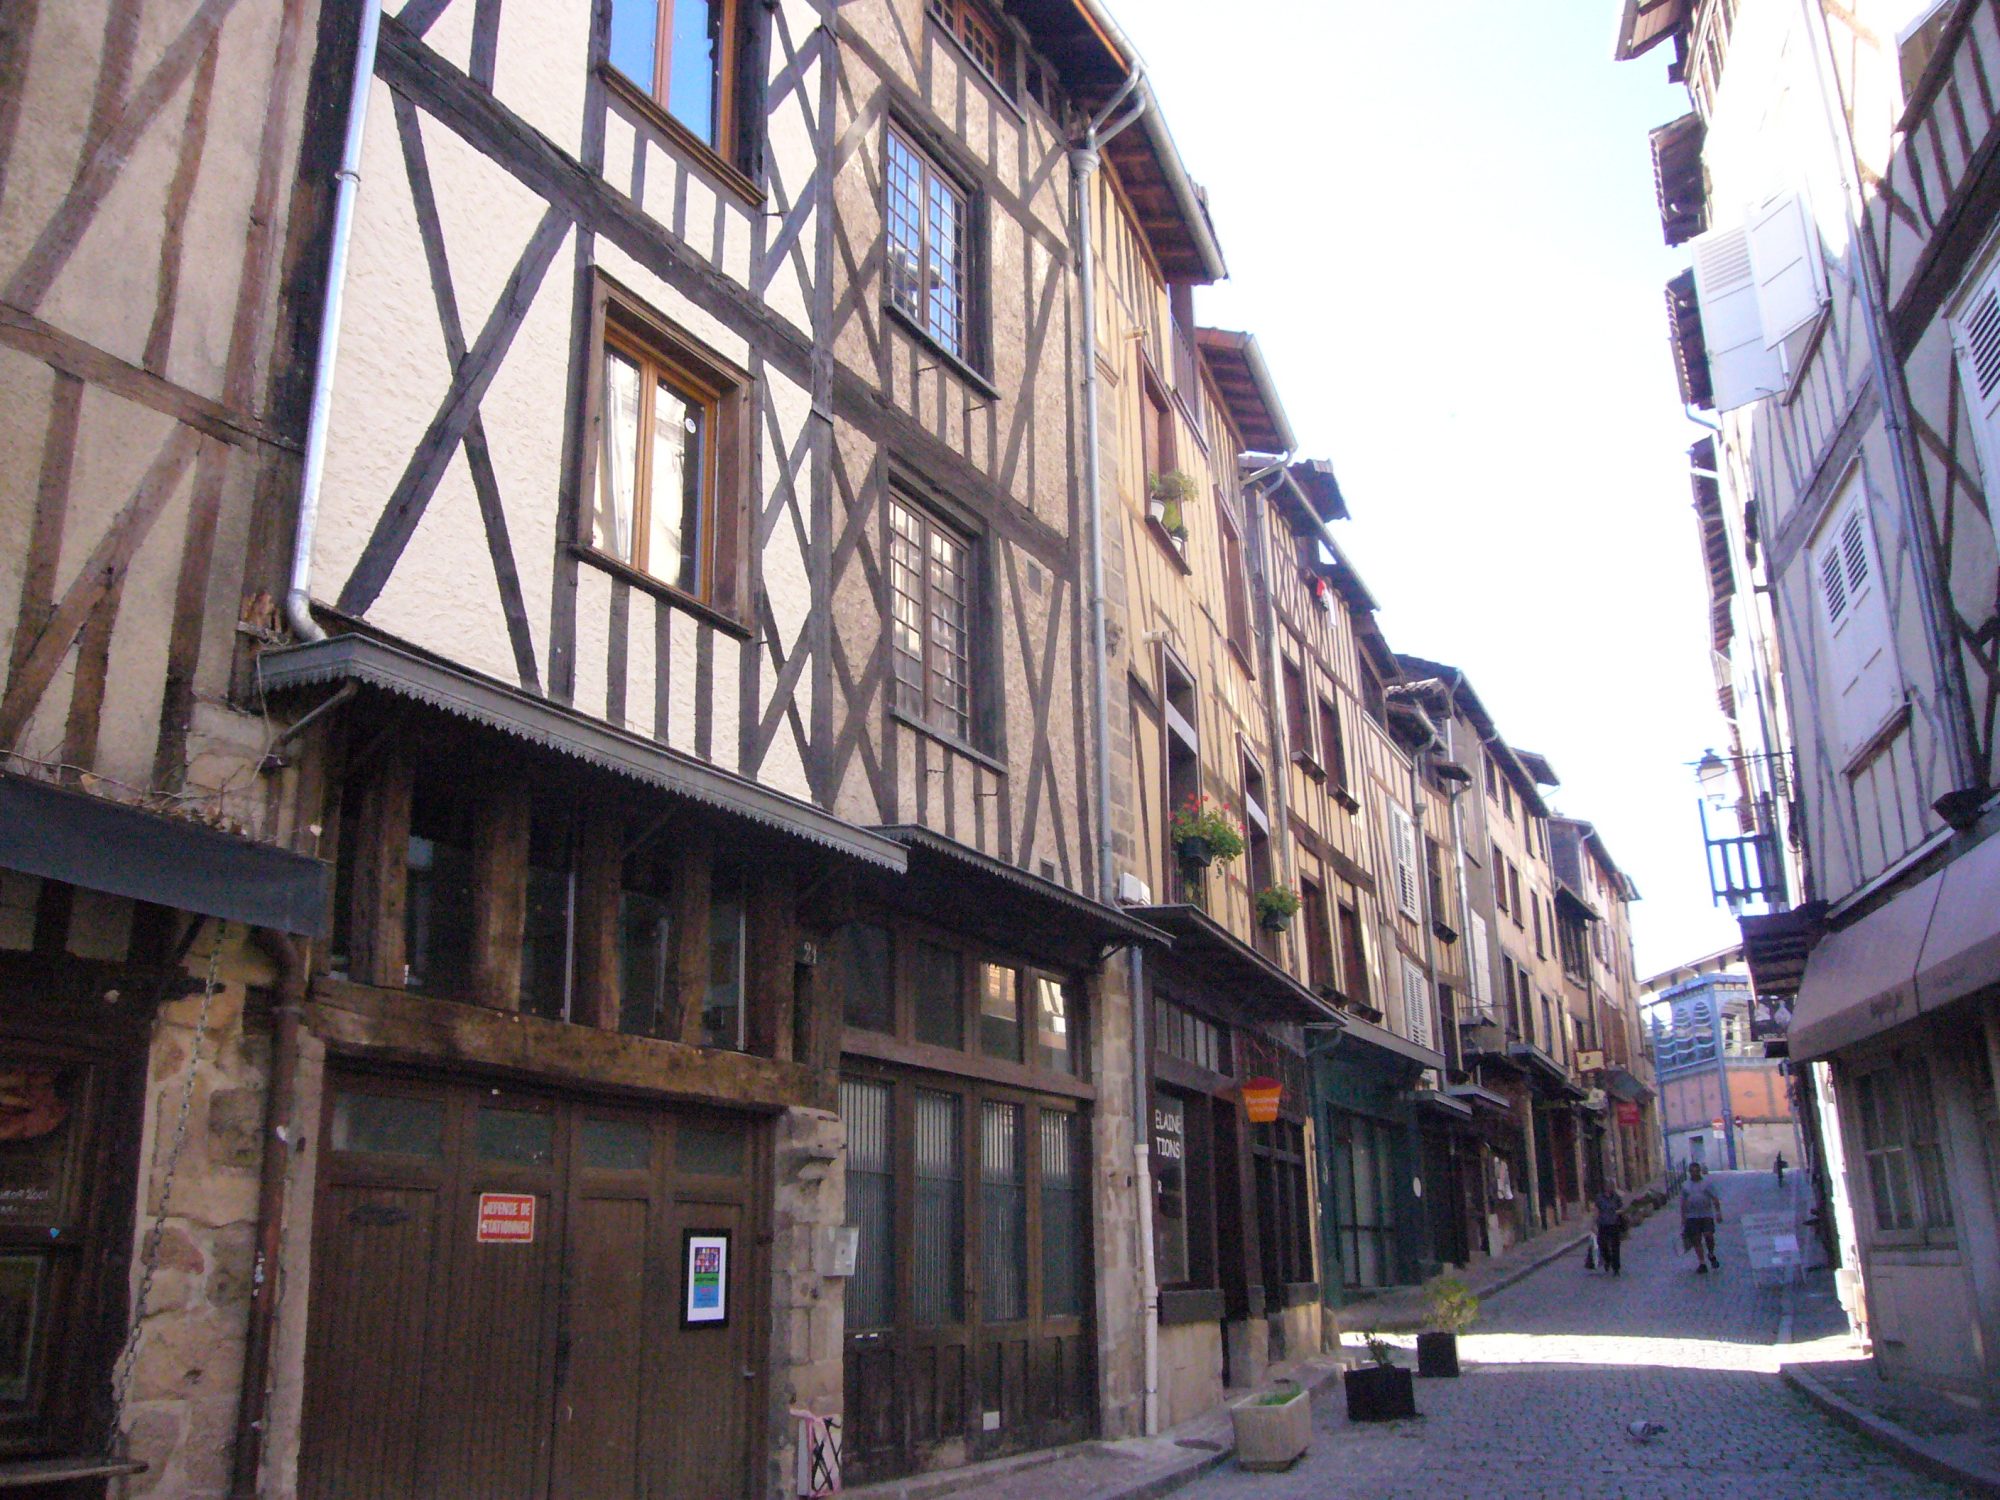 Boucherie Limoges